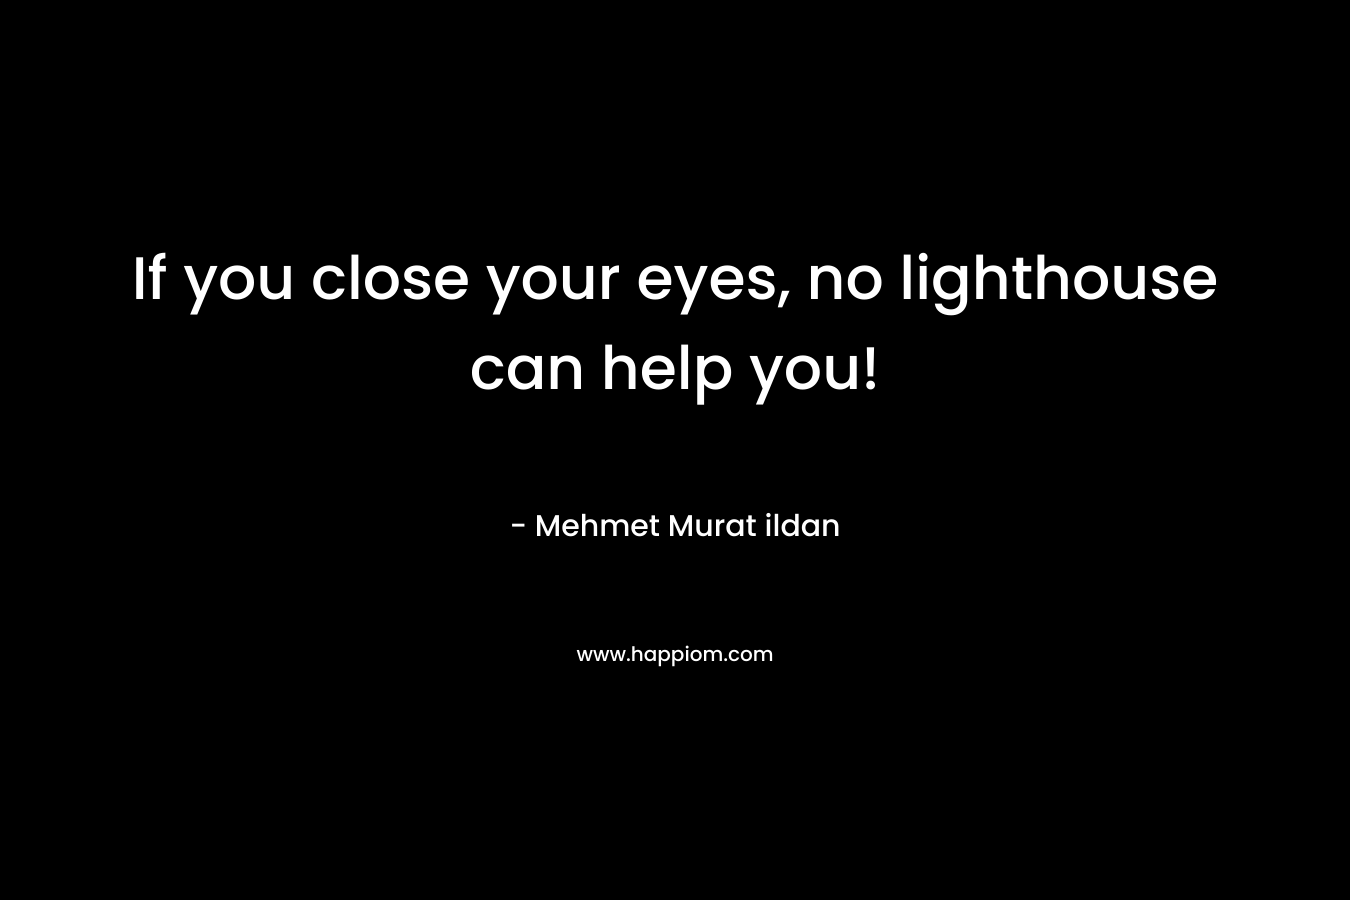 If you close your eyes, no lighthouse can help you! – Mehmet Murat ildan